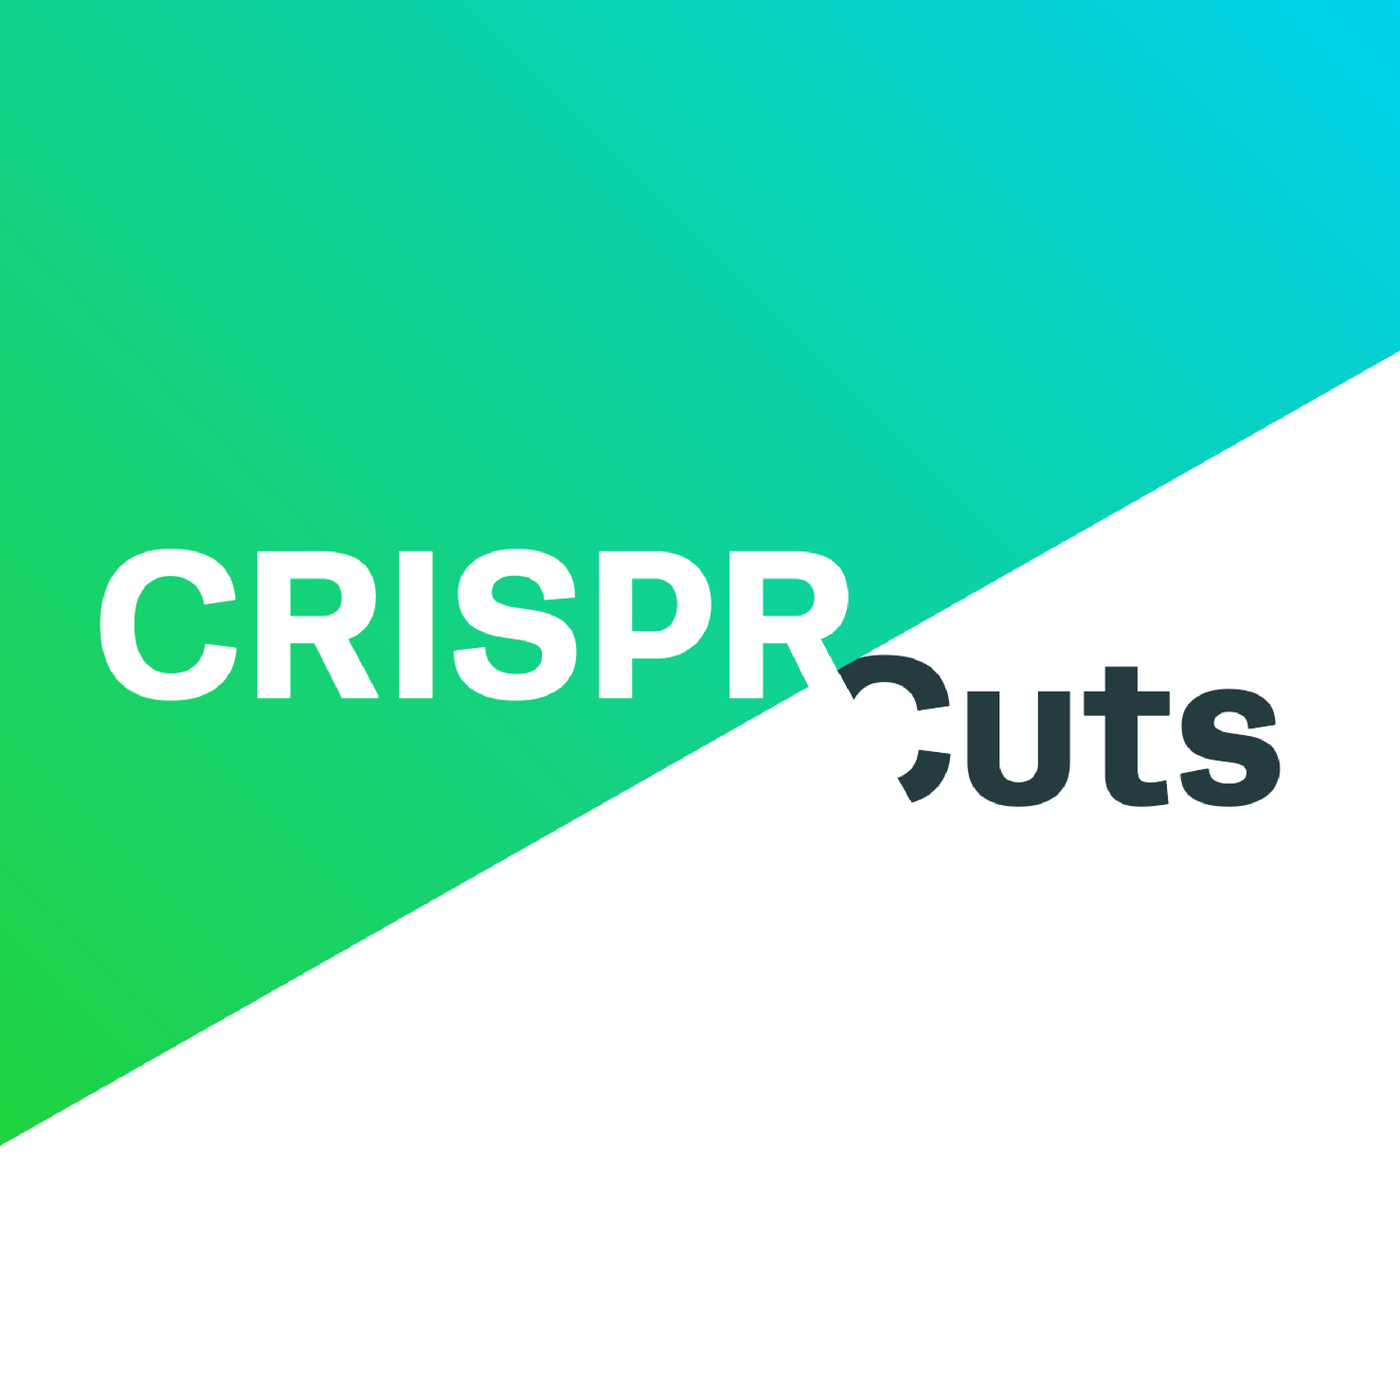 CRISPR Cuts